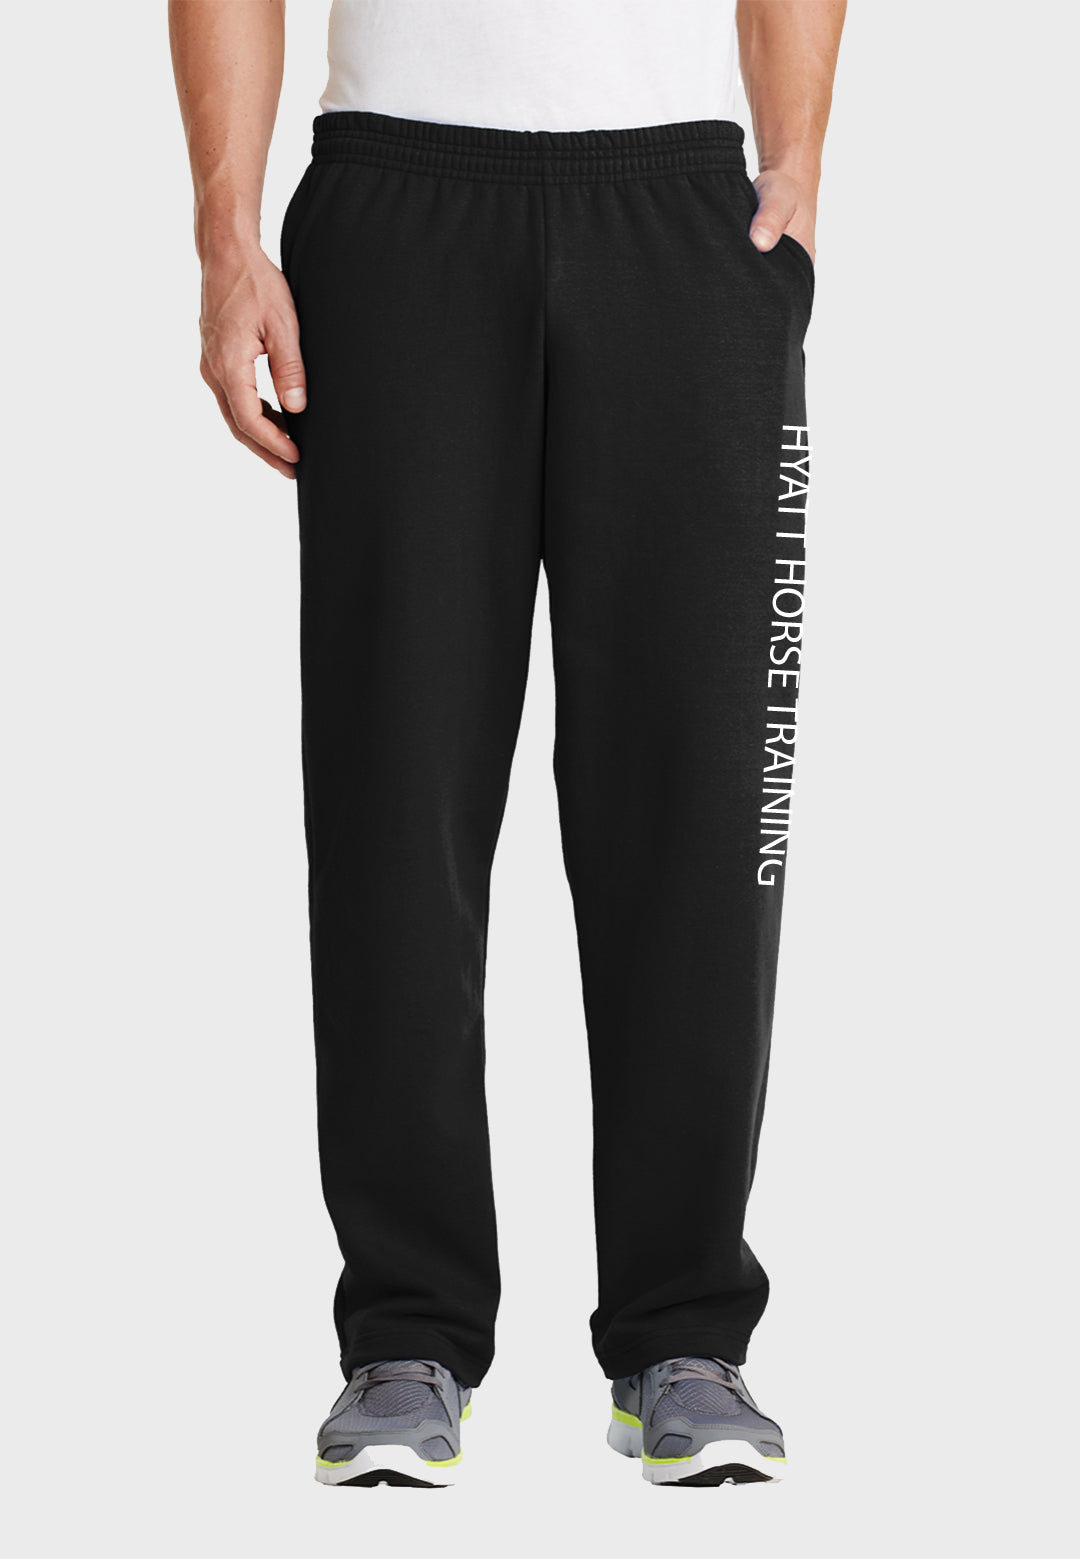 Hyatt Horse Training Port & Company® Core Fleece Sweatpant with Pockets (Unisex) - Black